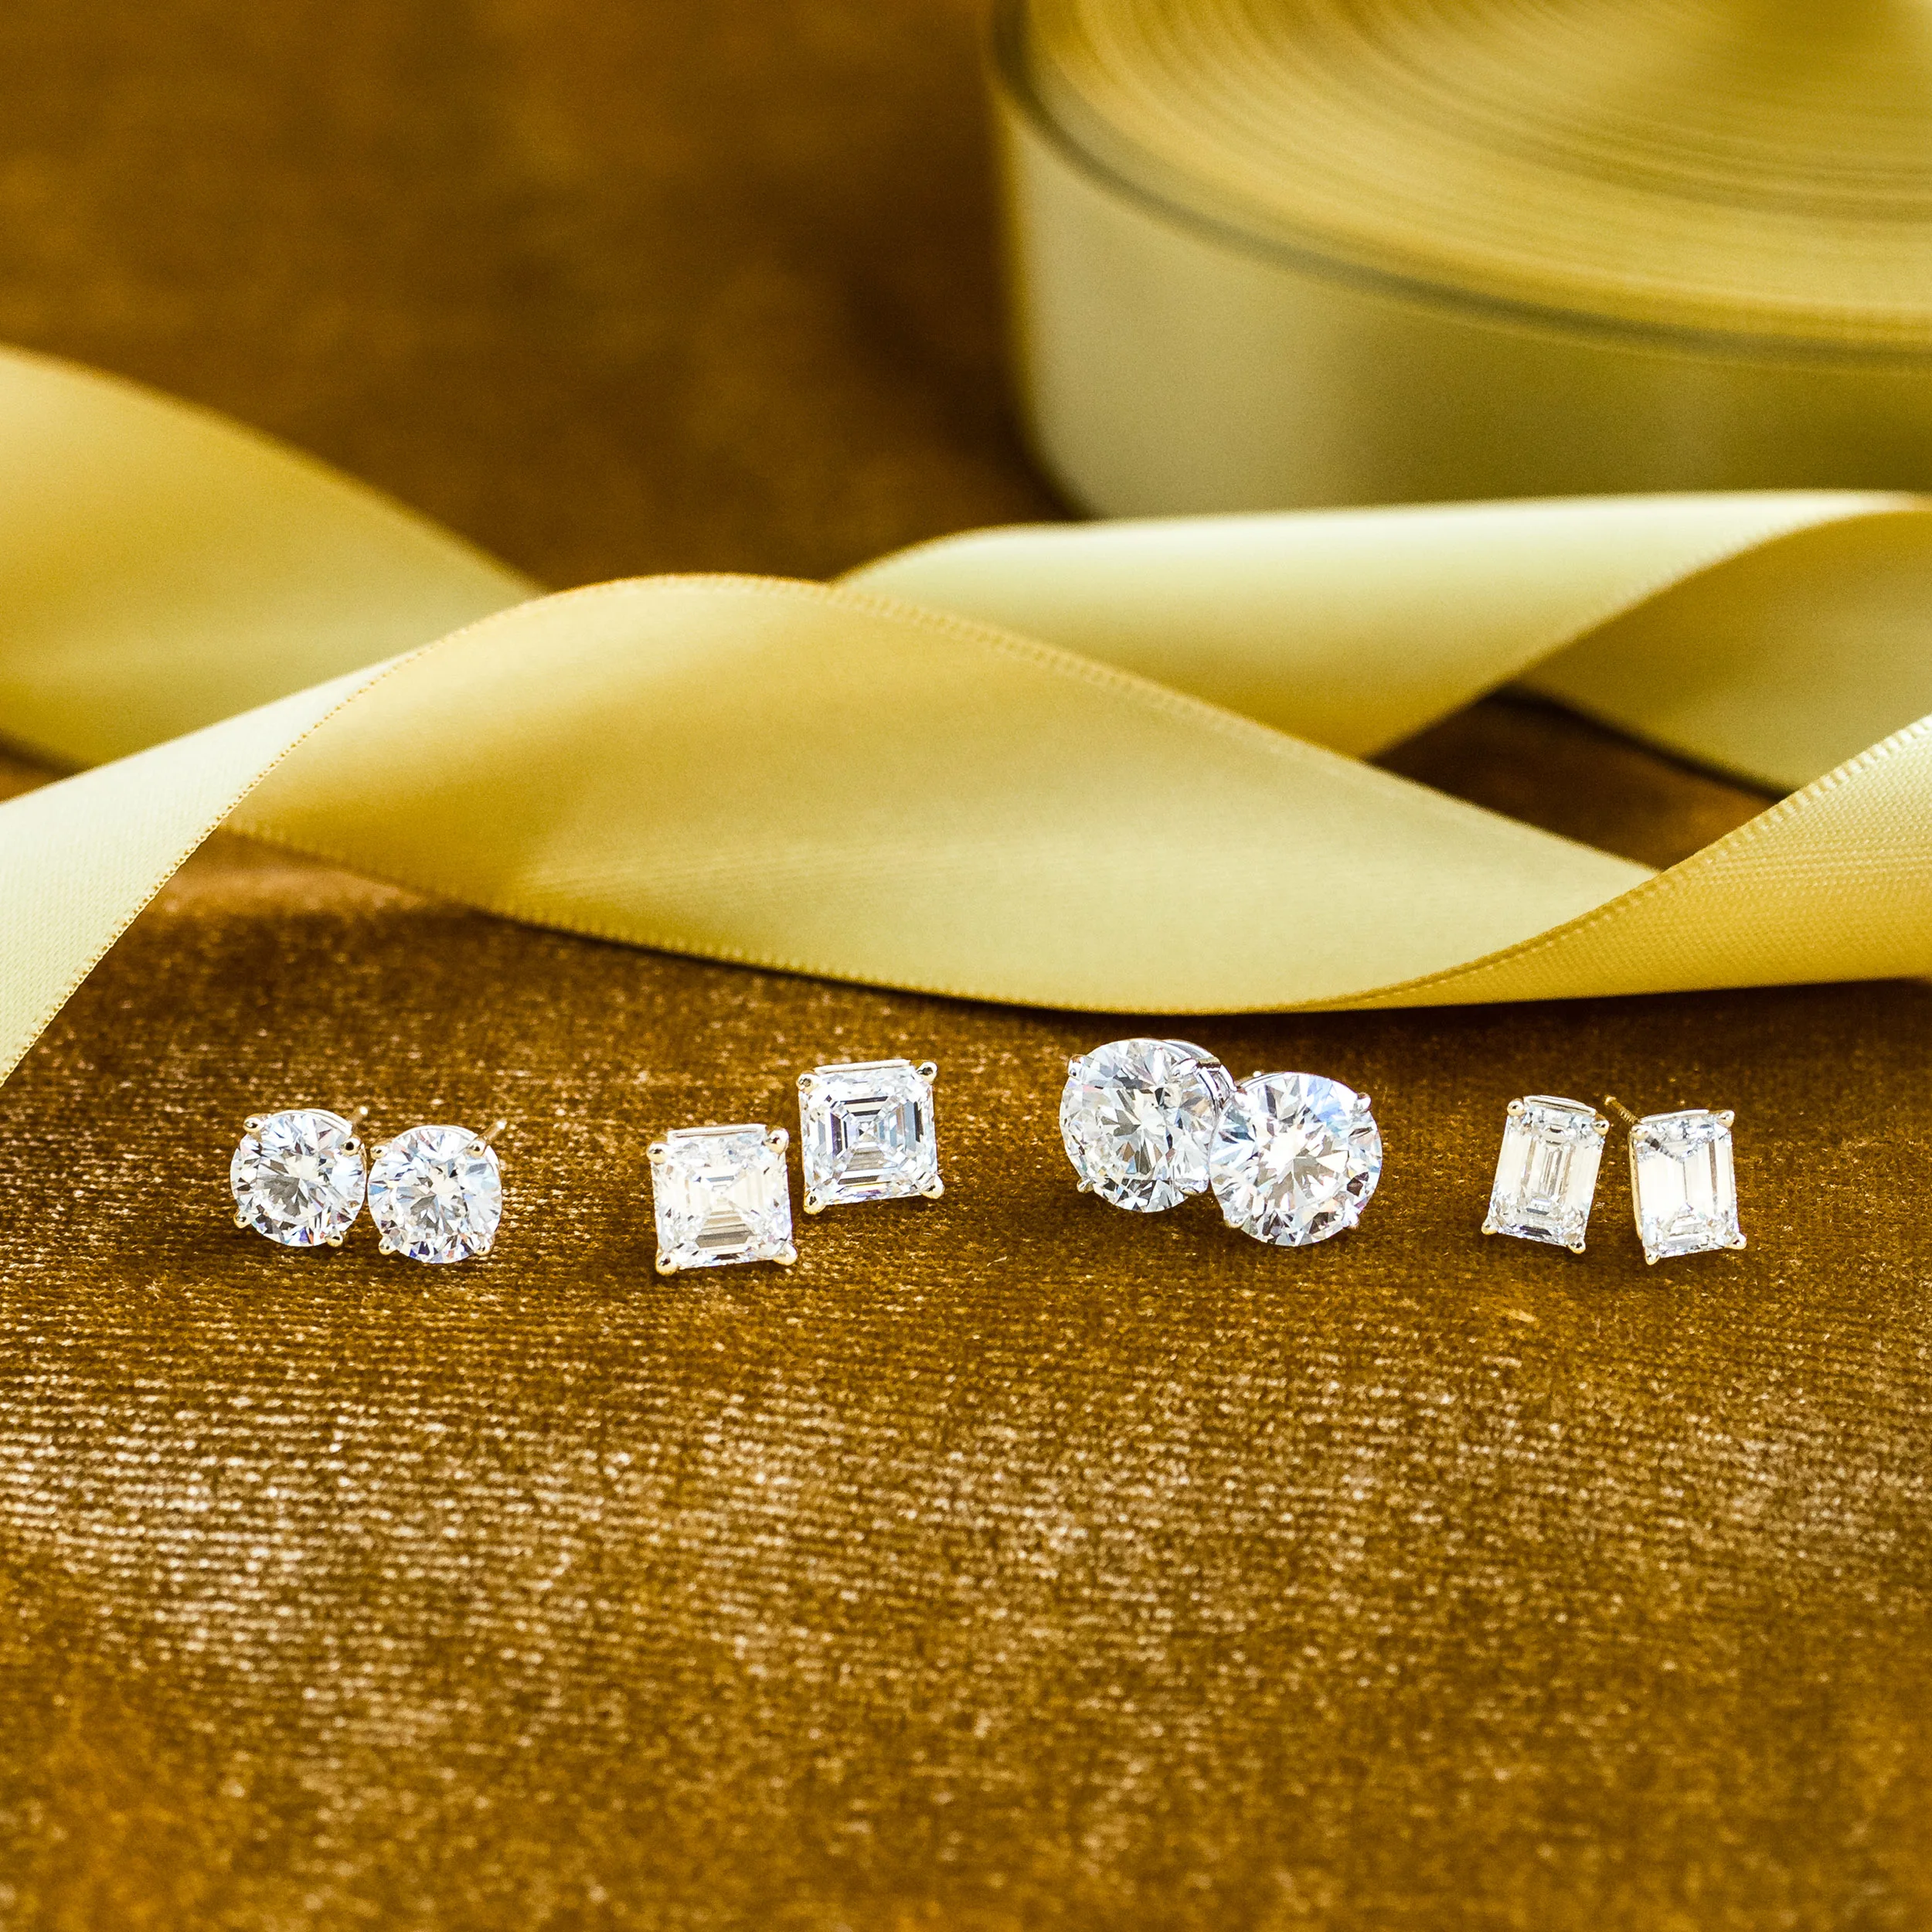 Platinum Round Stud Earrings featuring 2.0 Carat Lab Diamonds (Profile View)